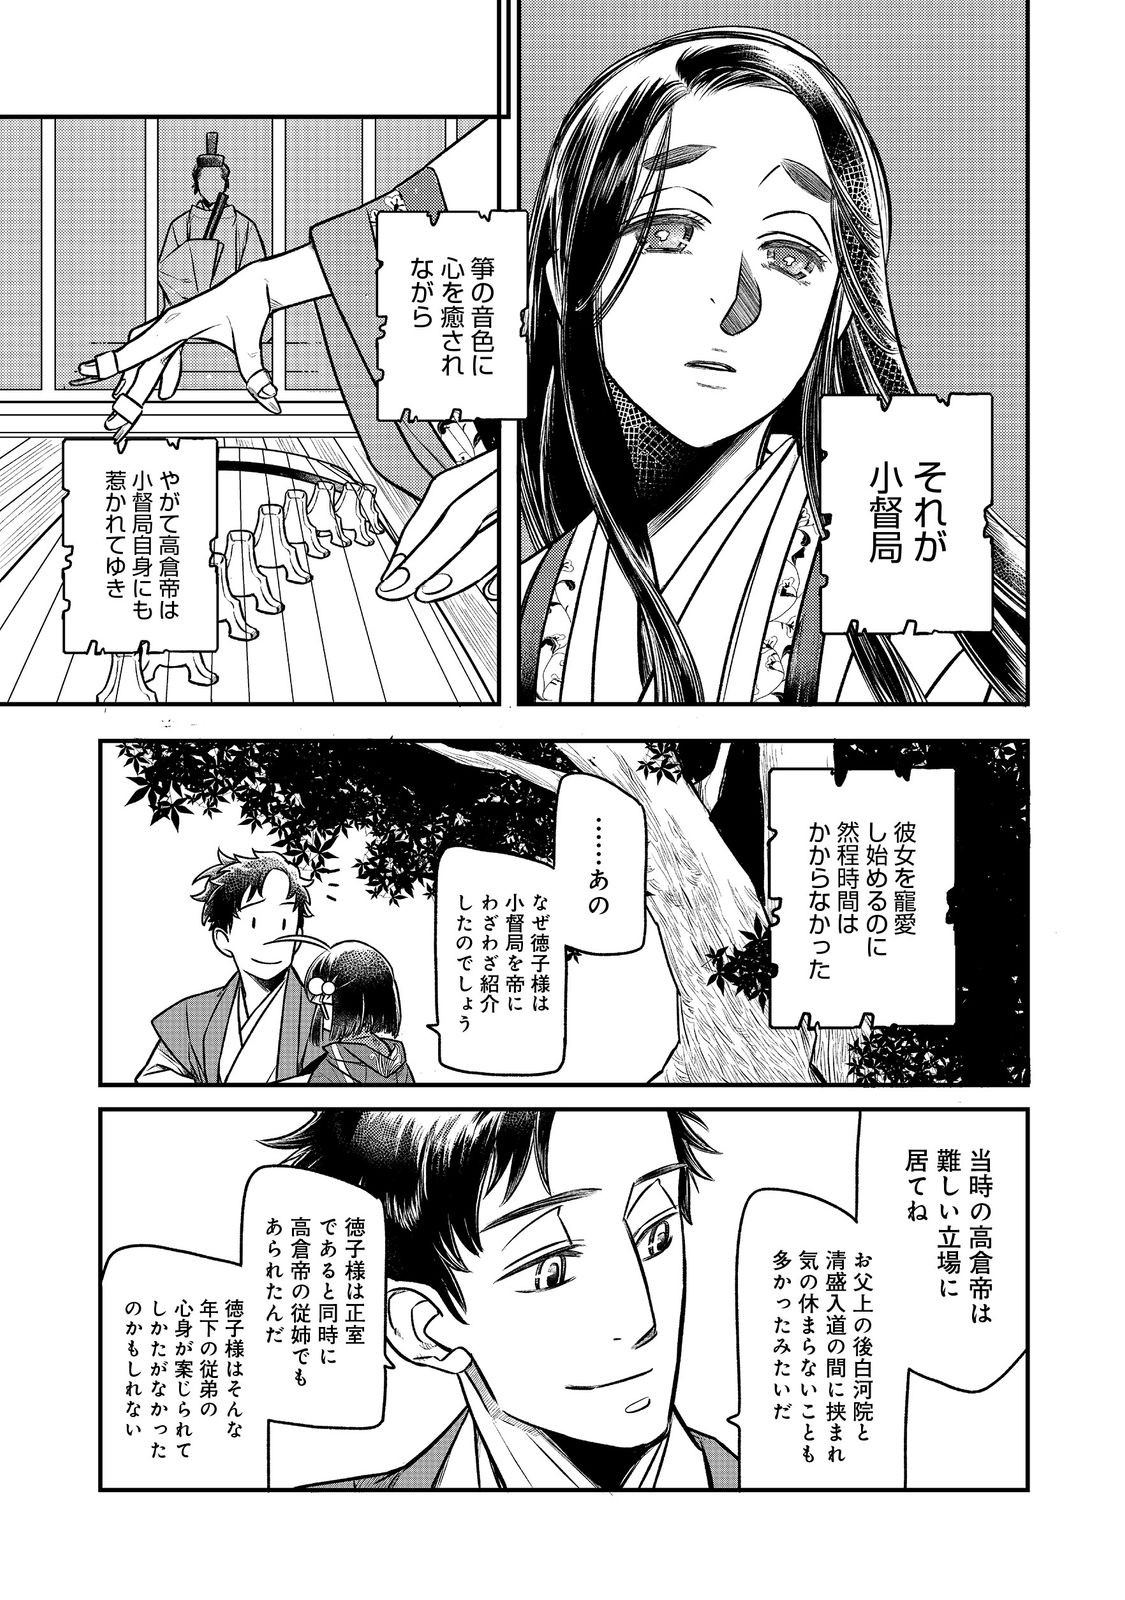 Kitanomandokoro-sama no Okeshougakari - Chapter 7.2 - Page 2